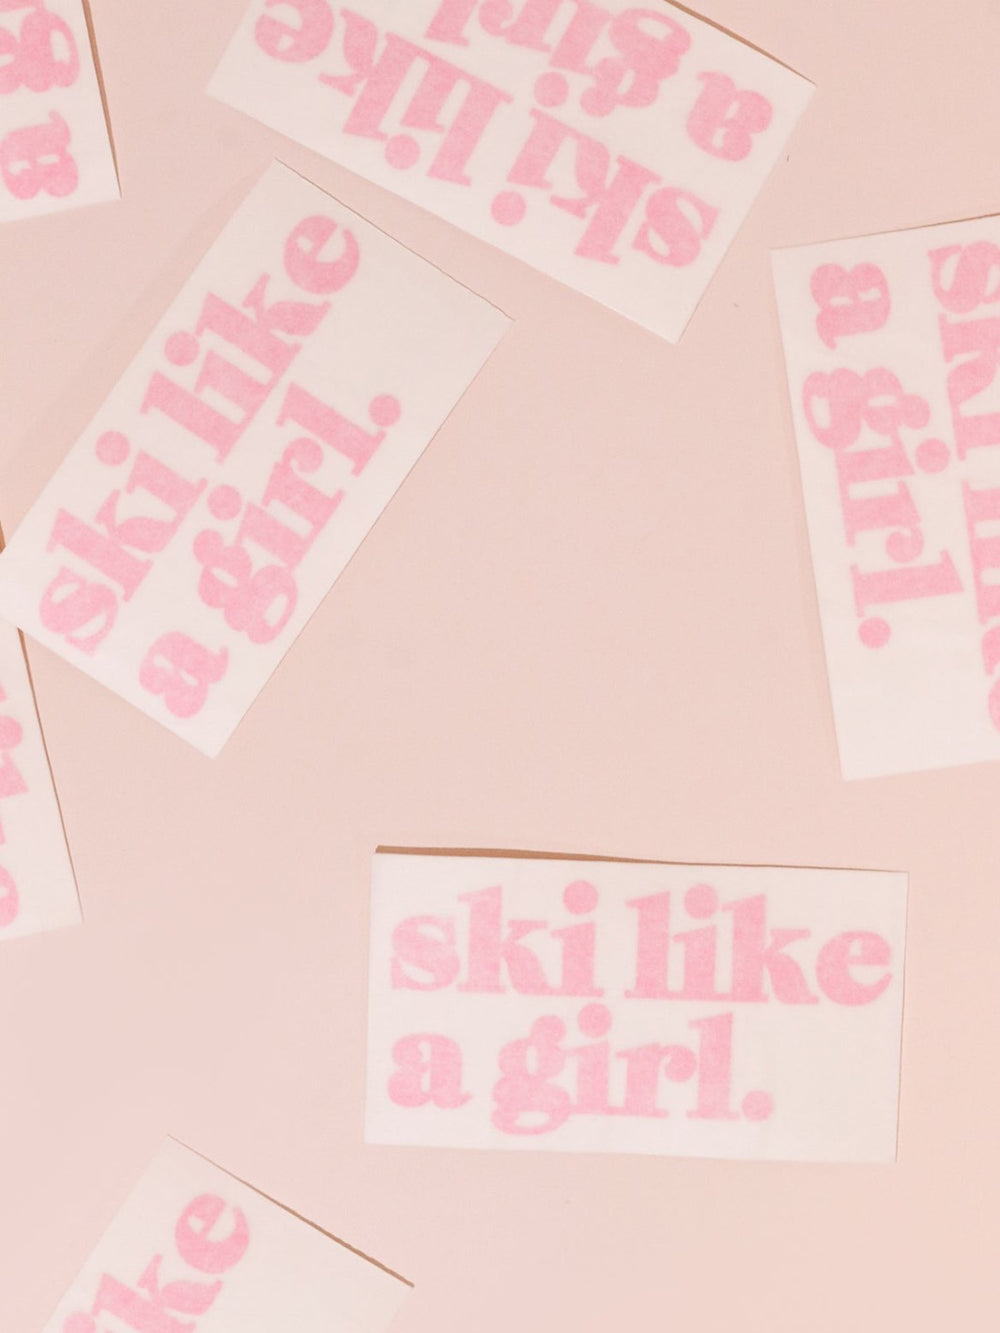 Full Send Arch Sticker – Blush – Ski Like a Girl